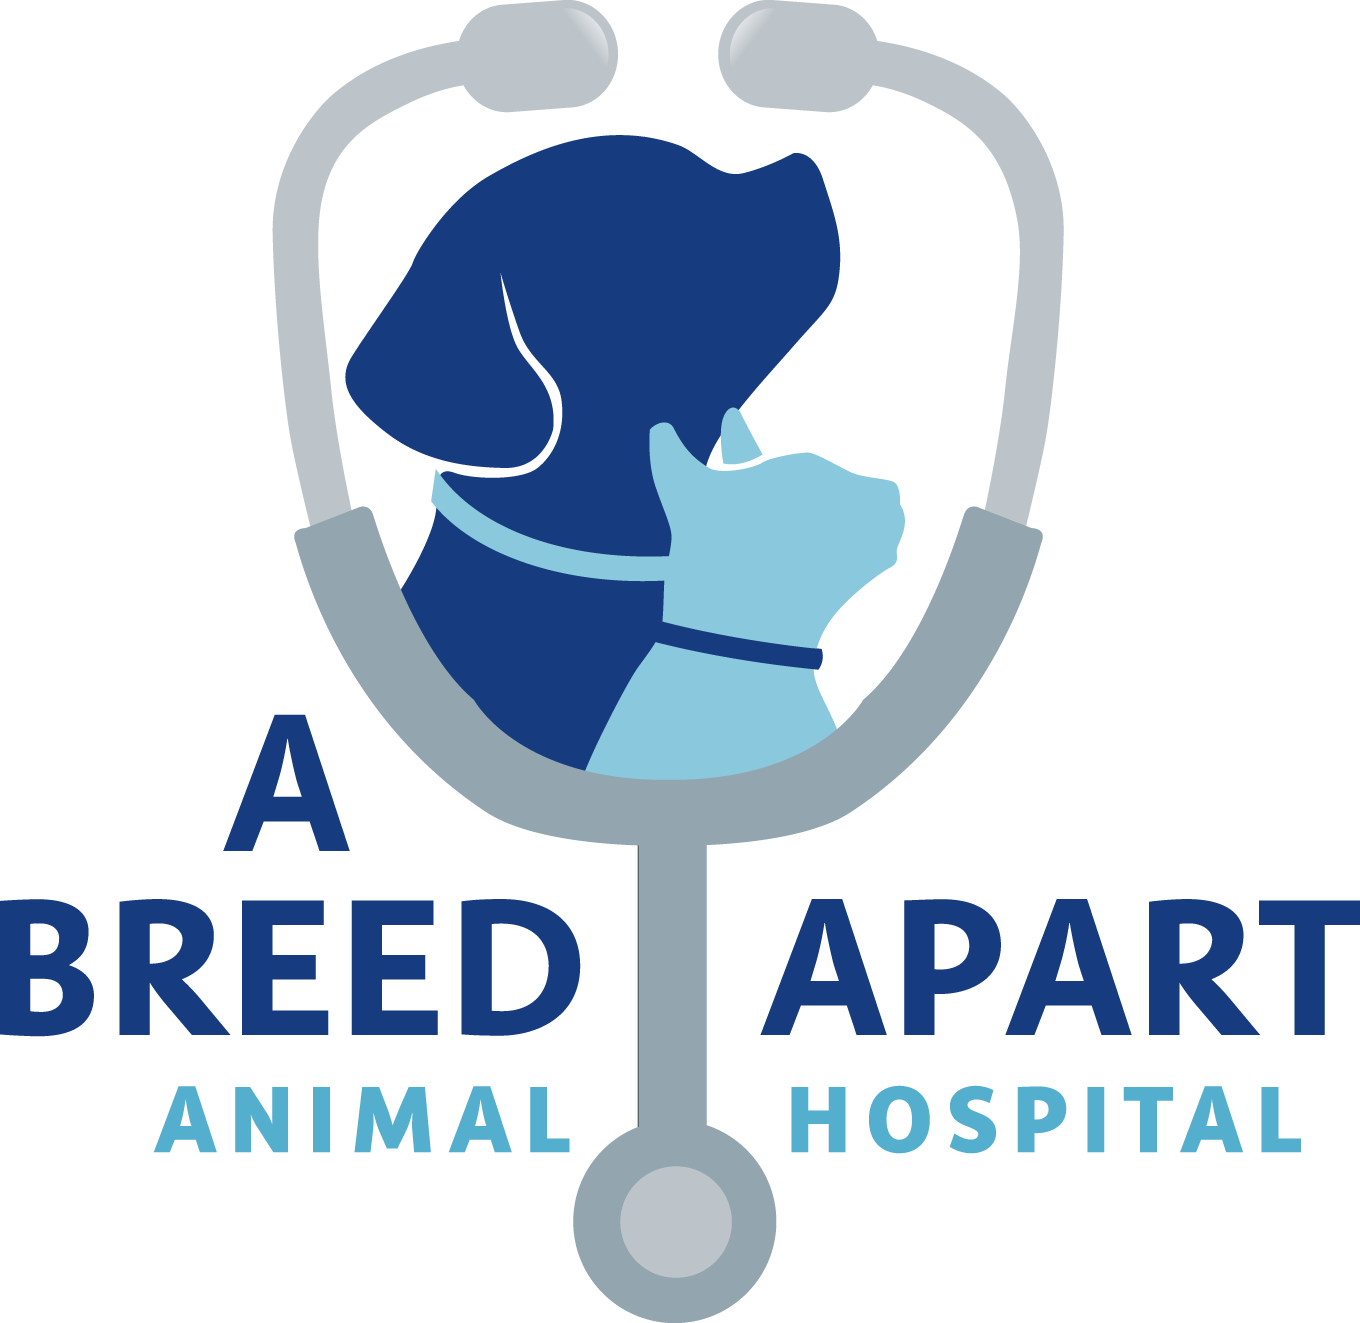 A Breed Apart Animal Hospital